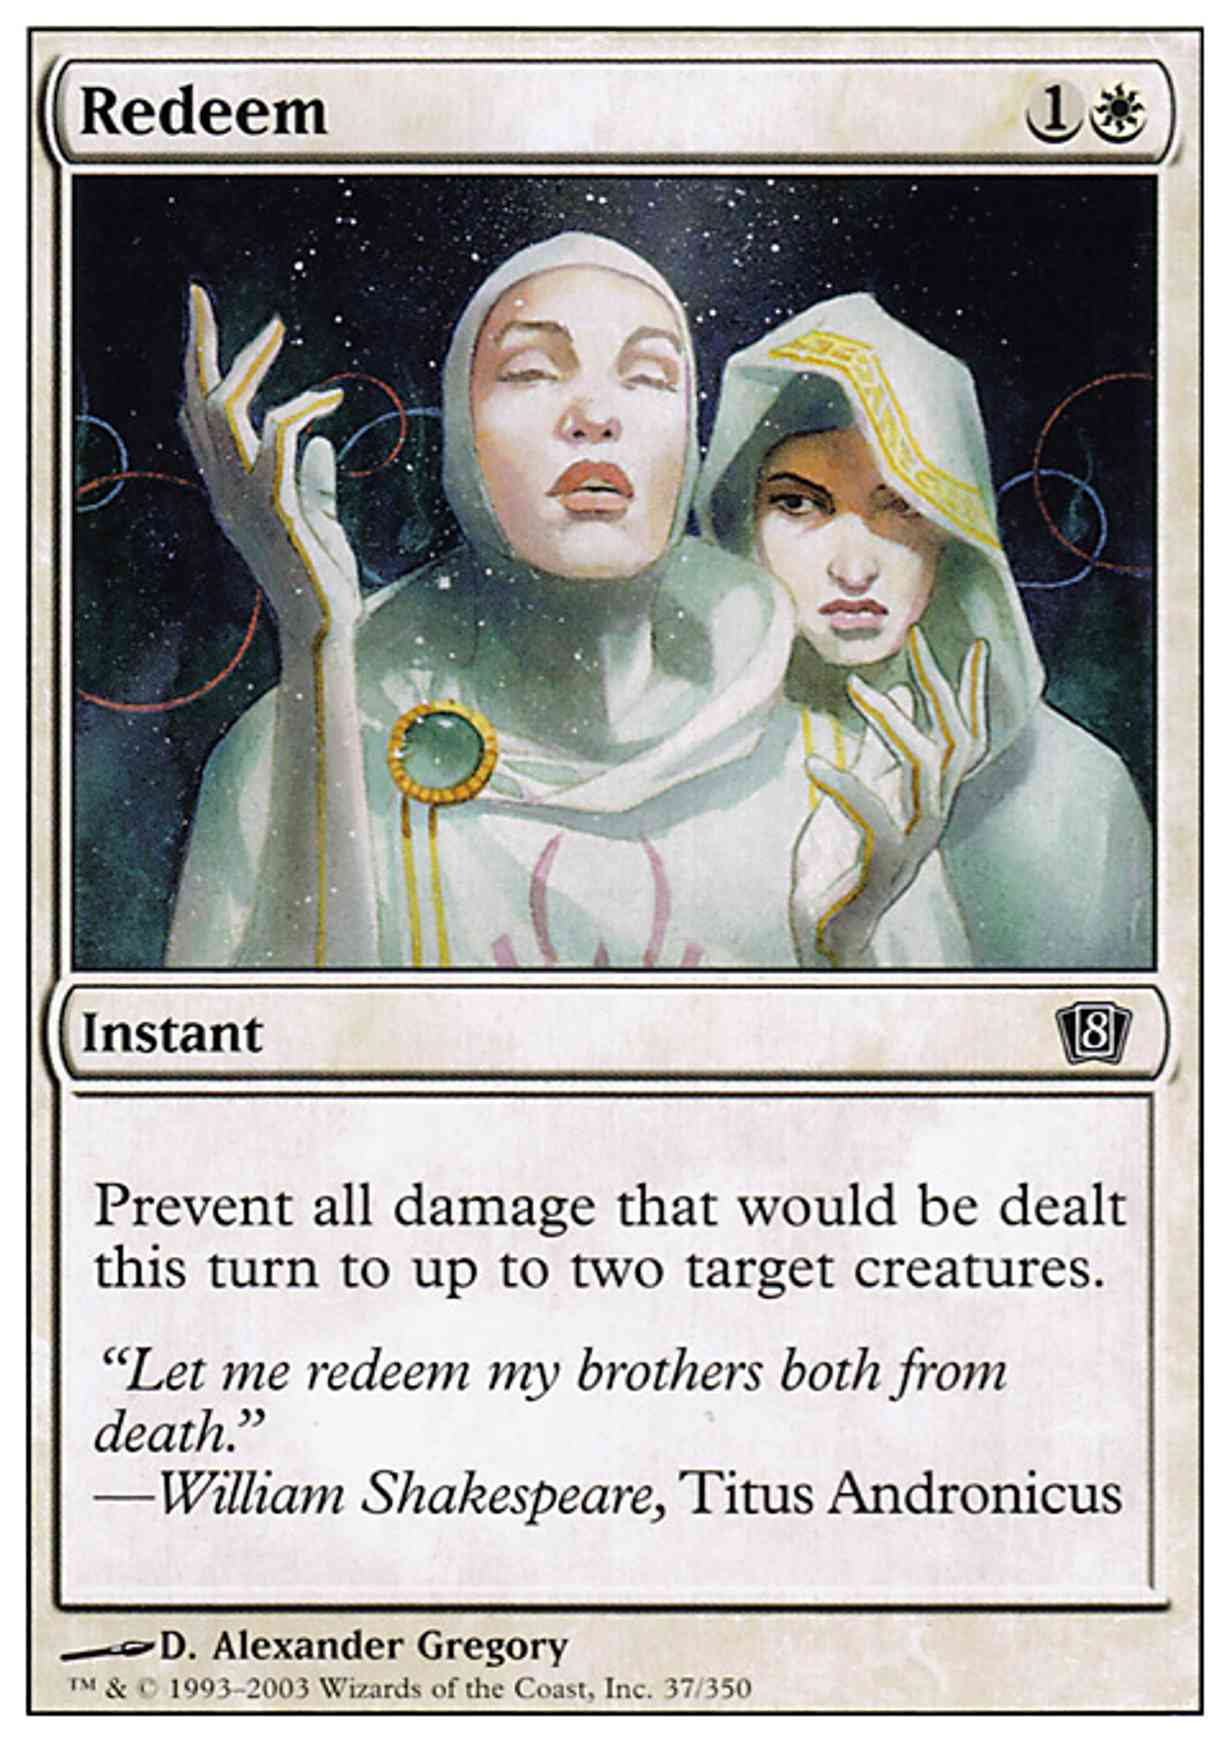 Redeem magic card front